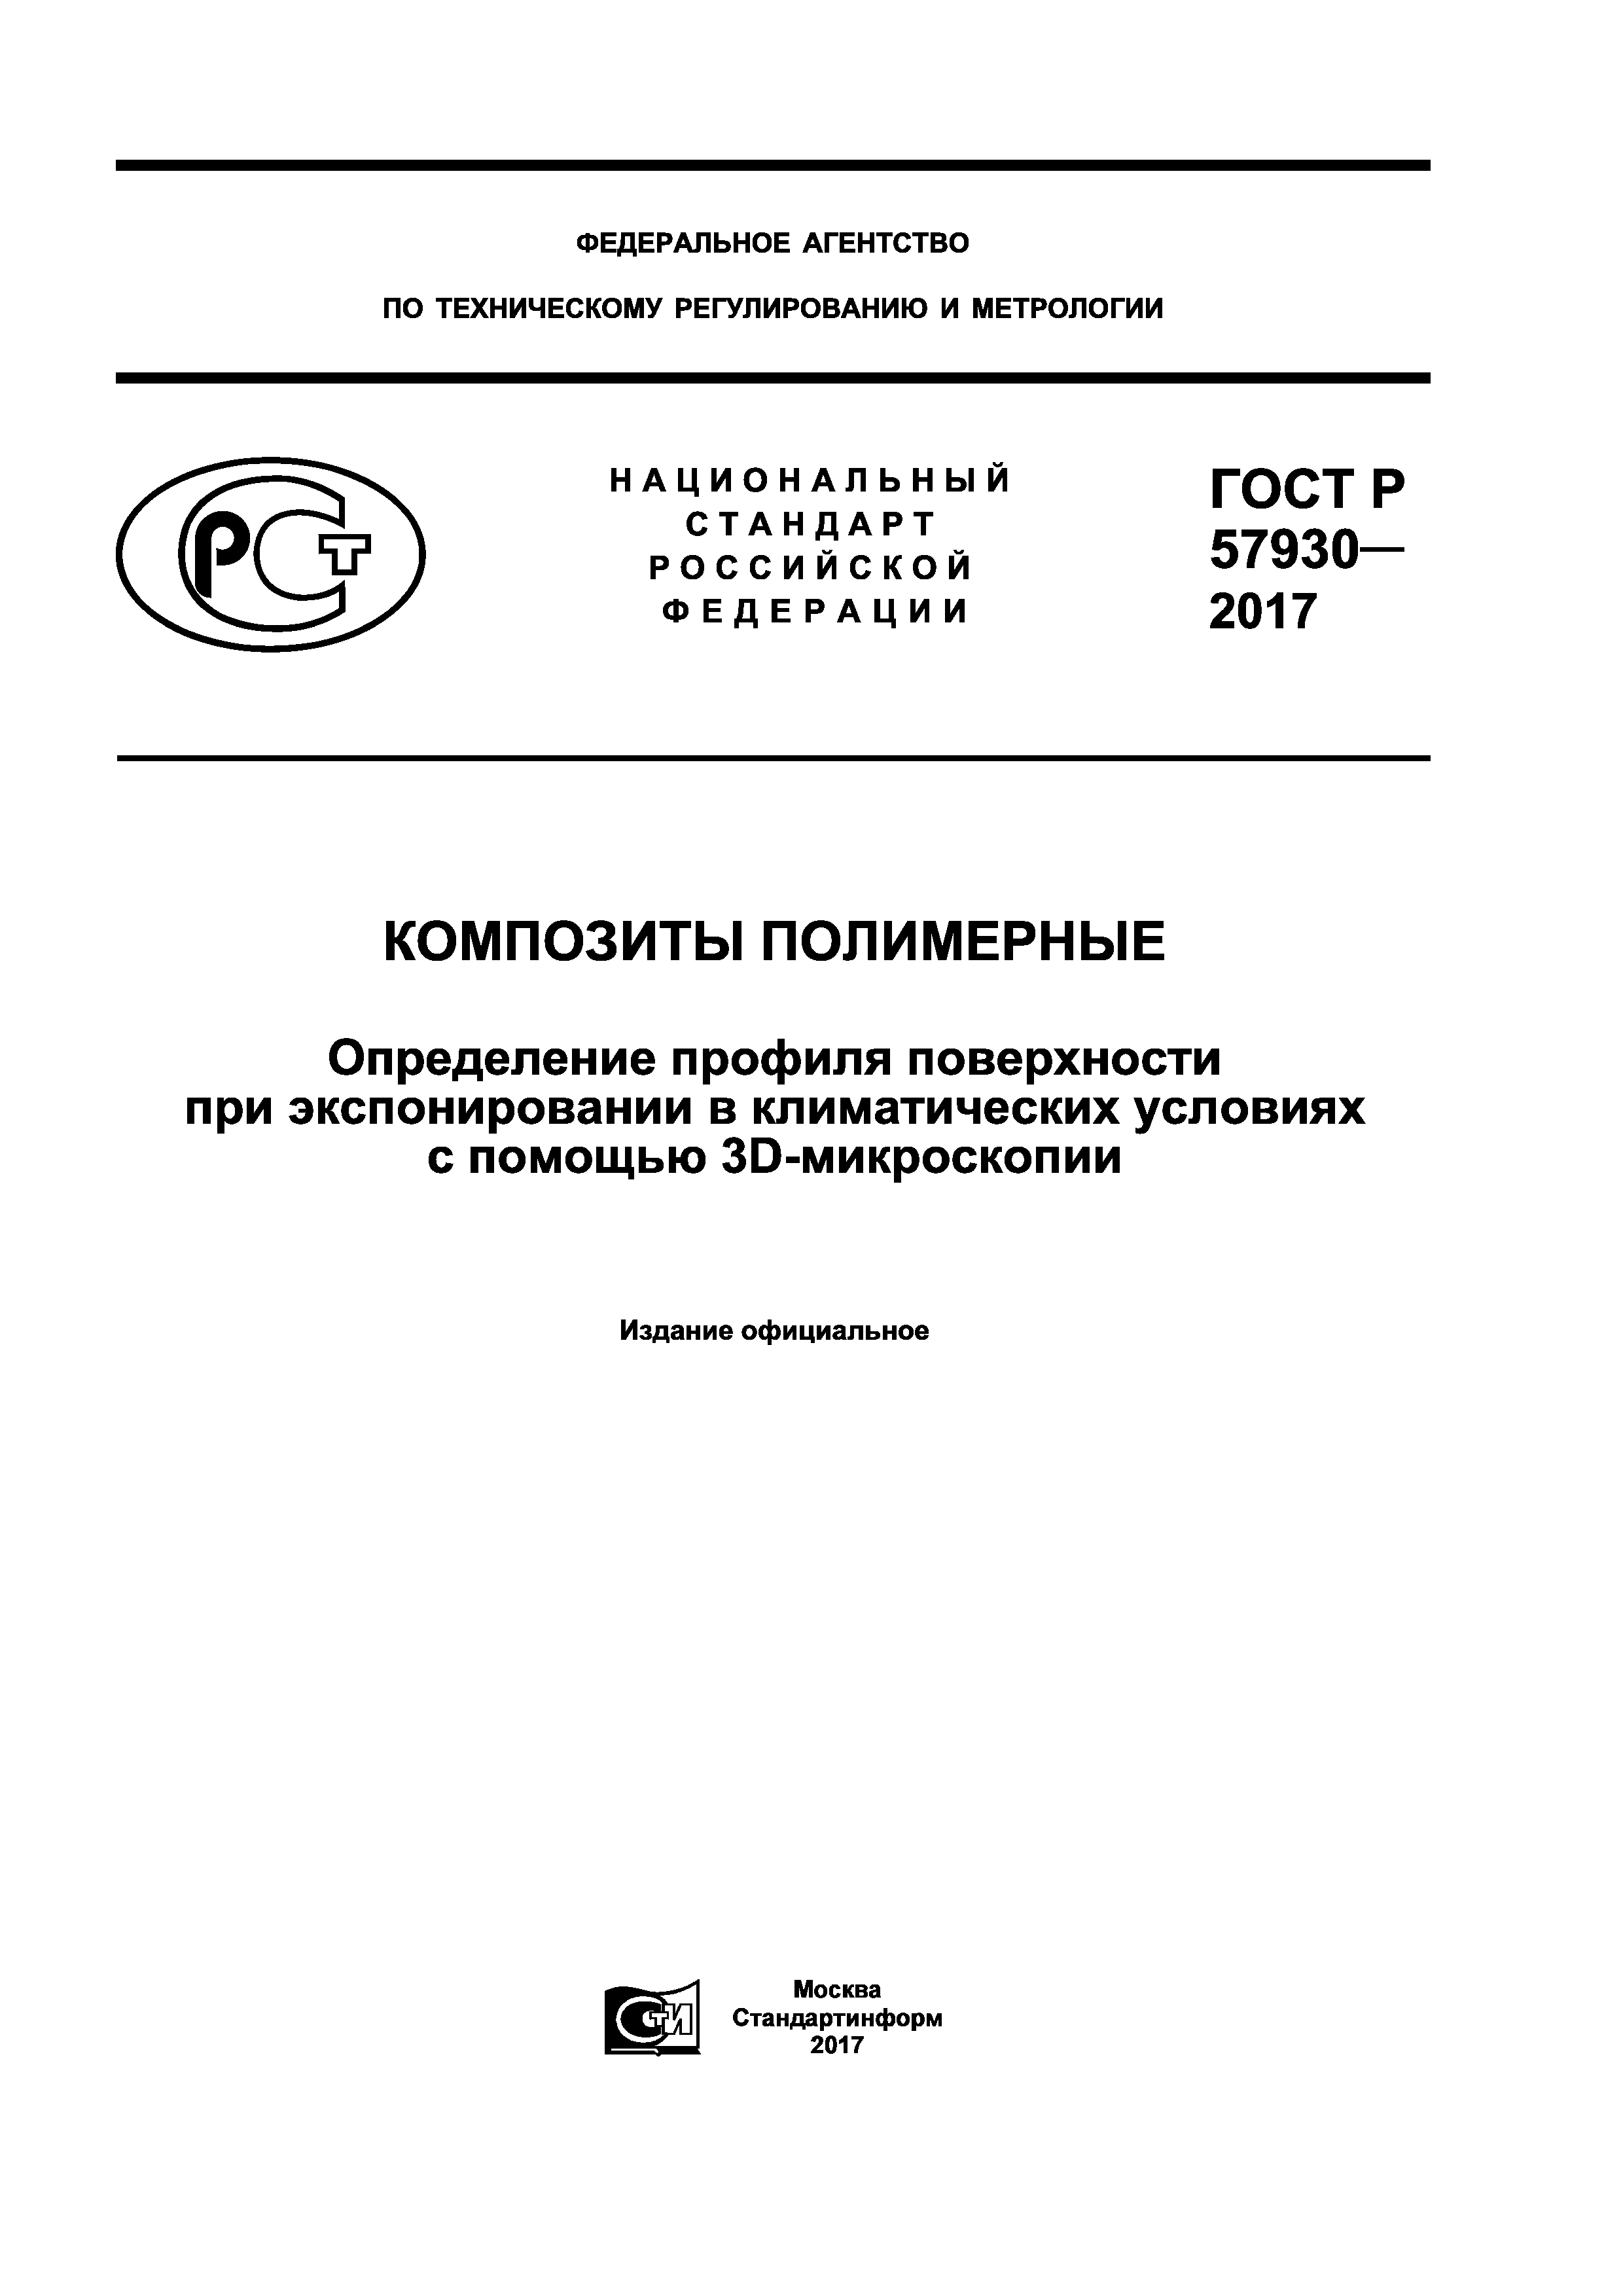 ГОСТ Р 57930-2017